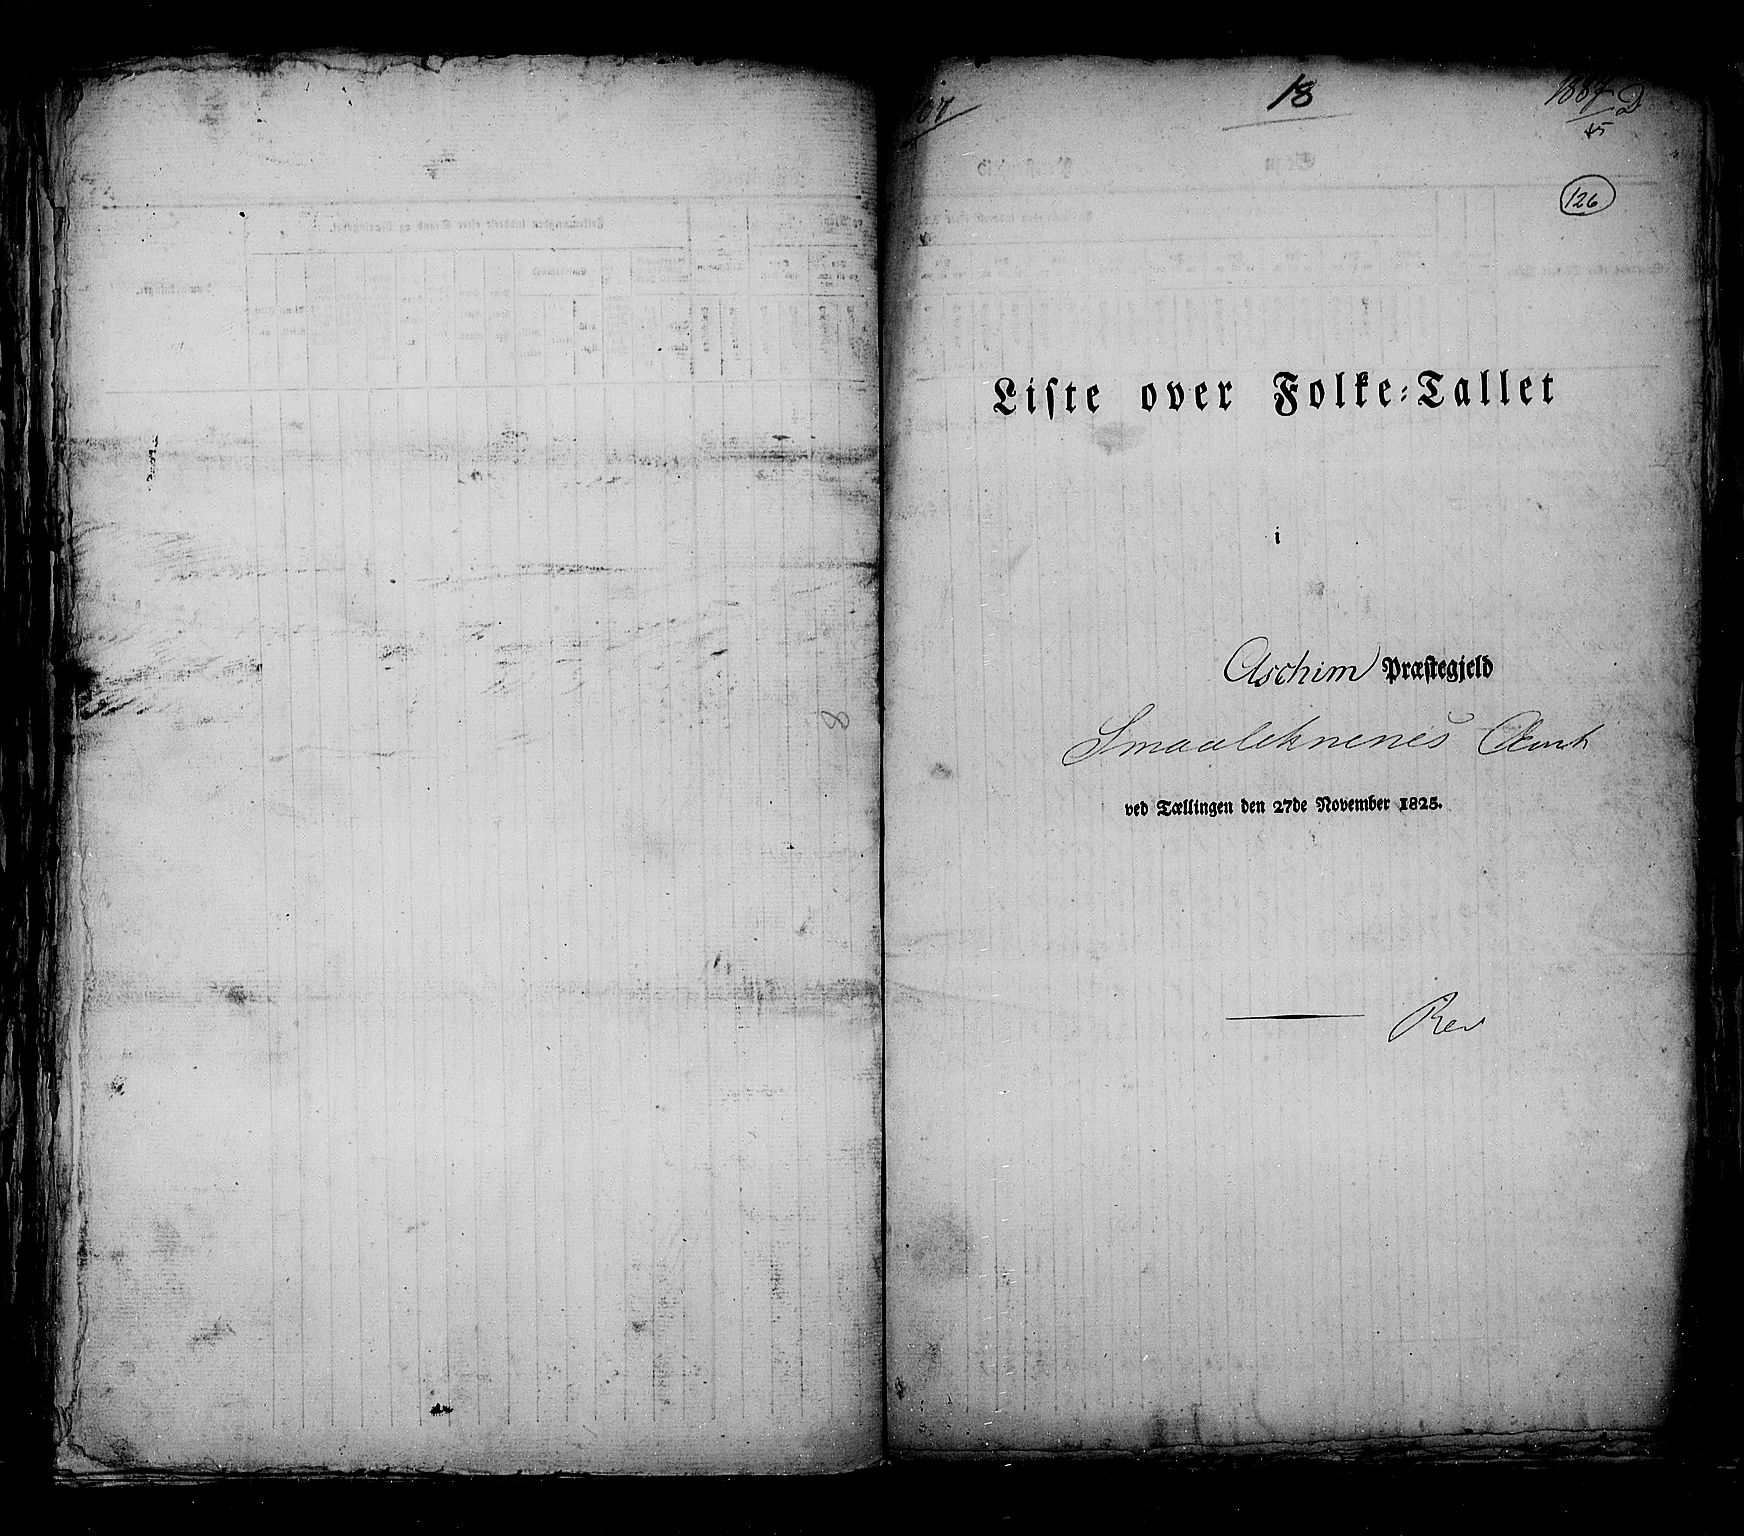 RA, Census 1825, vol. 3: Smålenenes amt, 1825, p. 126